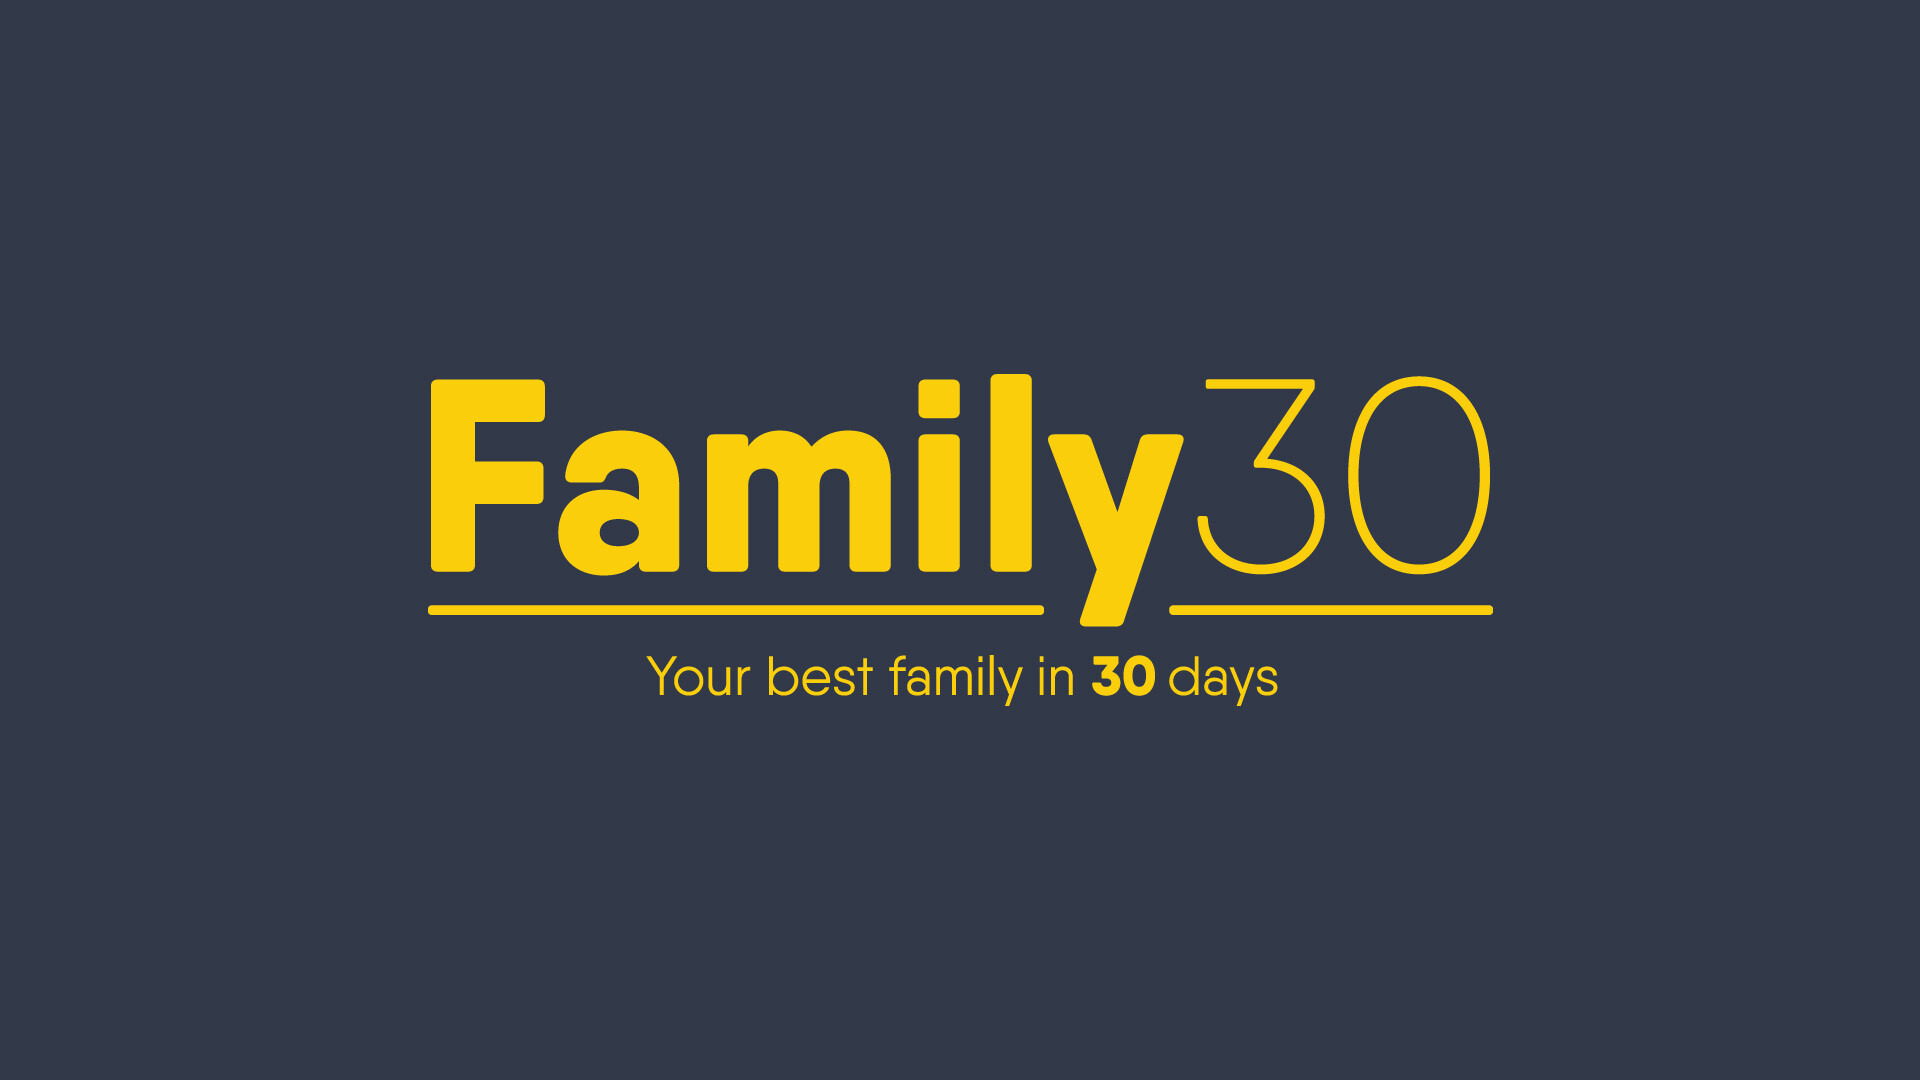 Family 30 Part 2